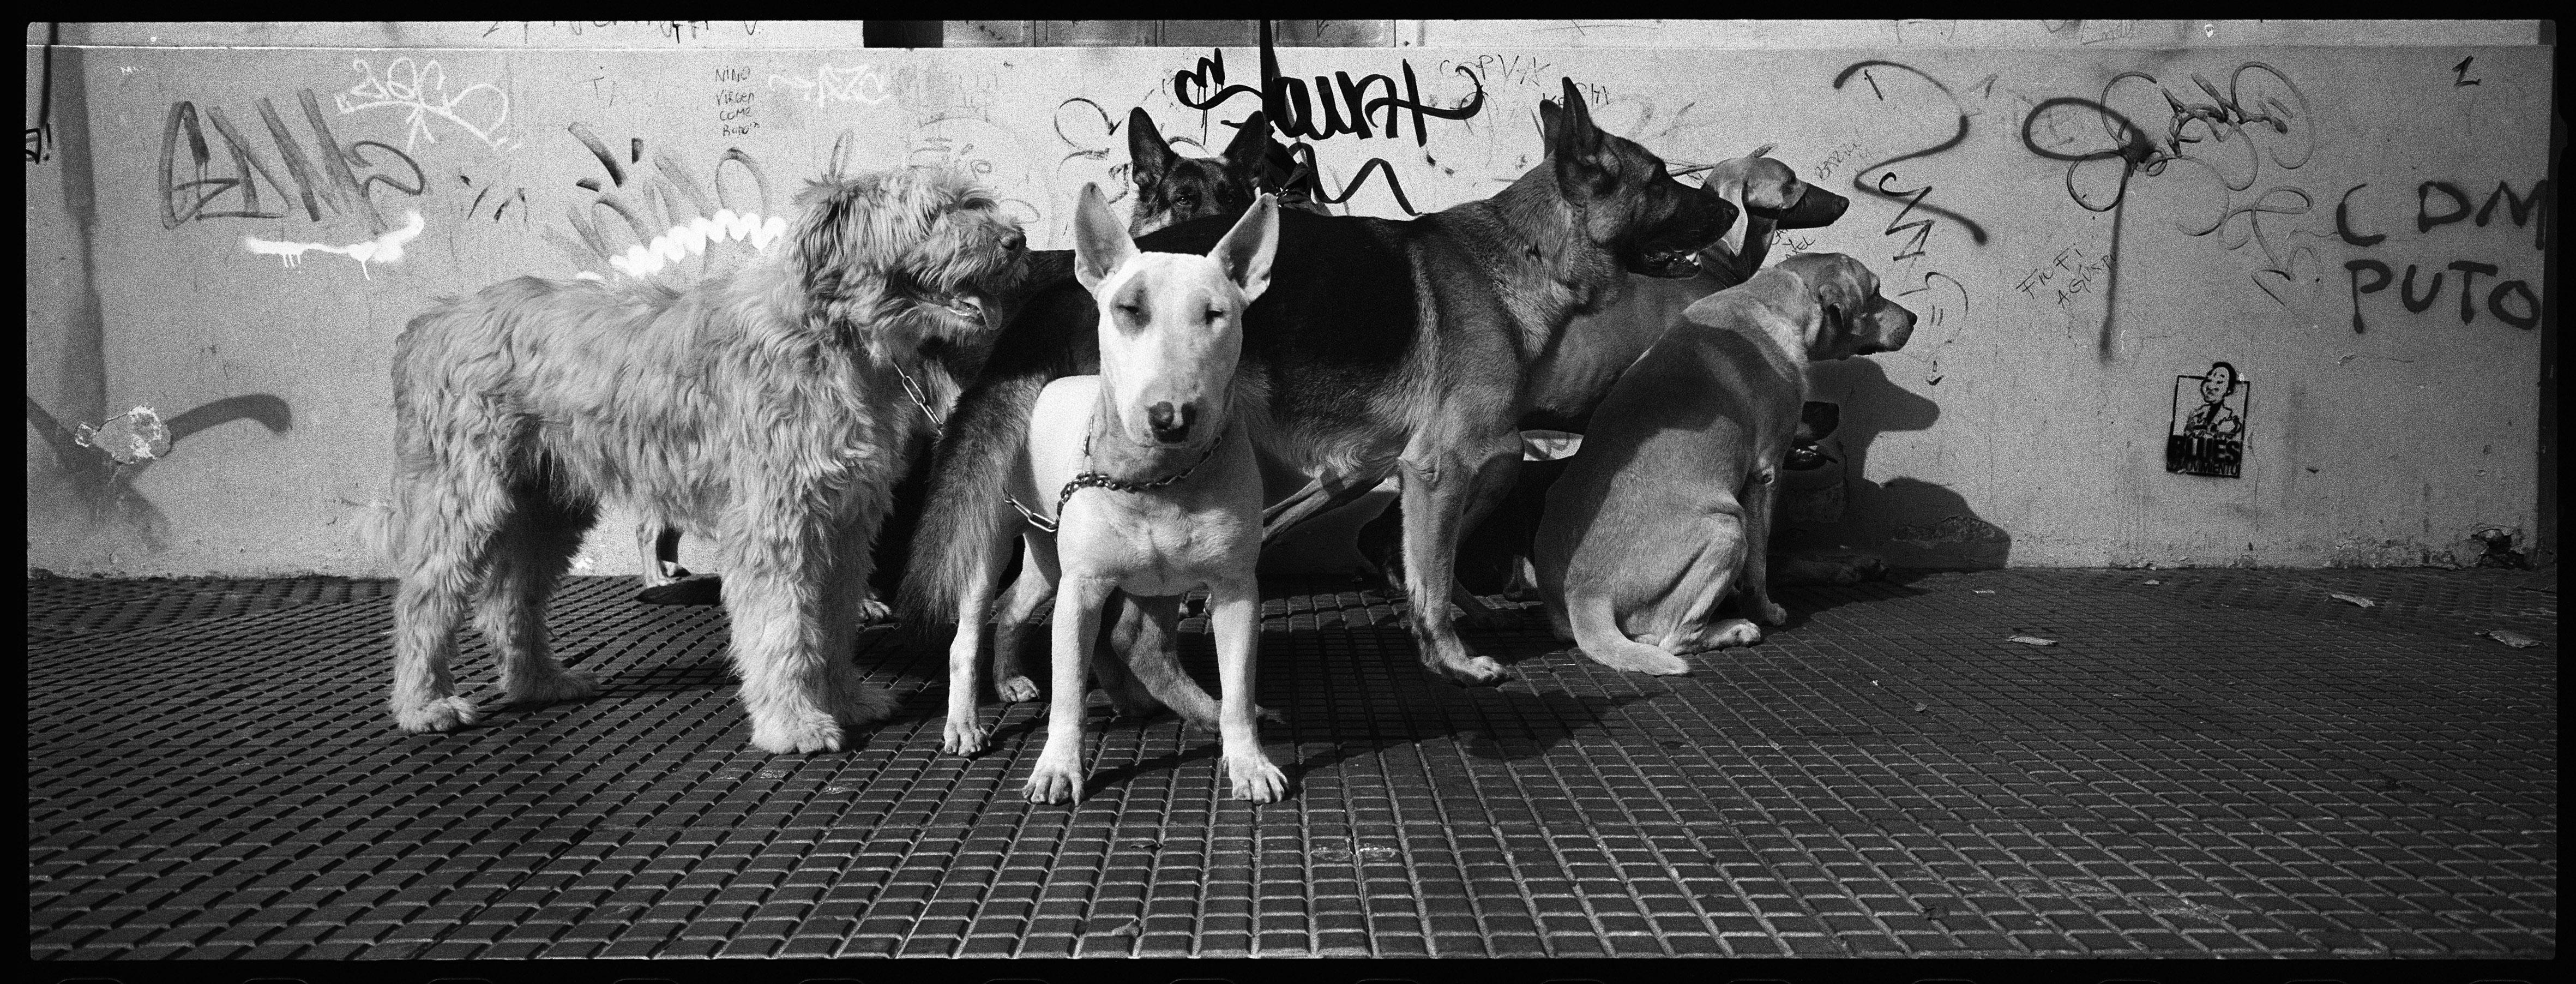 Benjamin Ruffieux Landscape Photograph - dog gang (buenos aires)